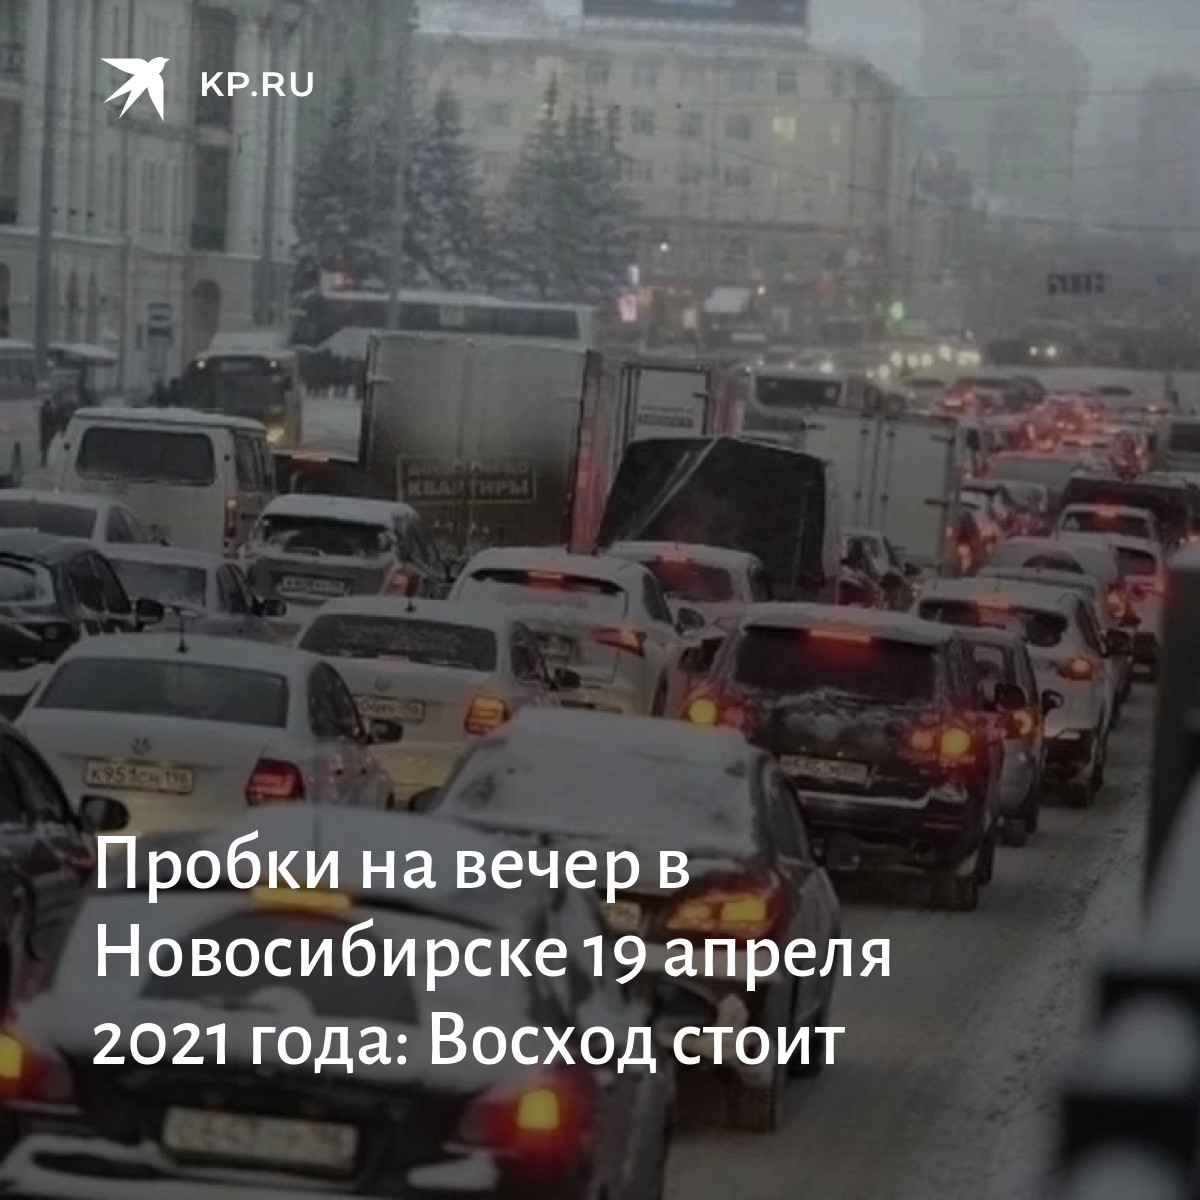 Https nsk kp ru. Пробки юмор. ЖК цветы видео про пробки. Москва не готова к зиме смешные фото про пробки.